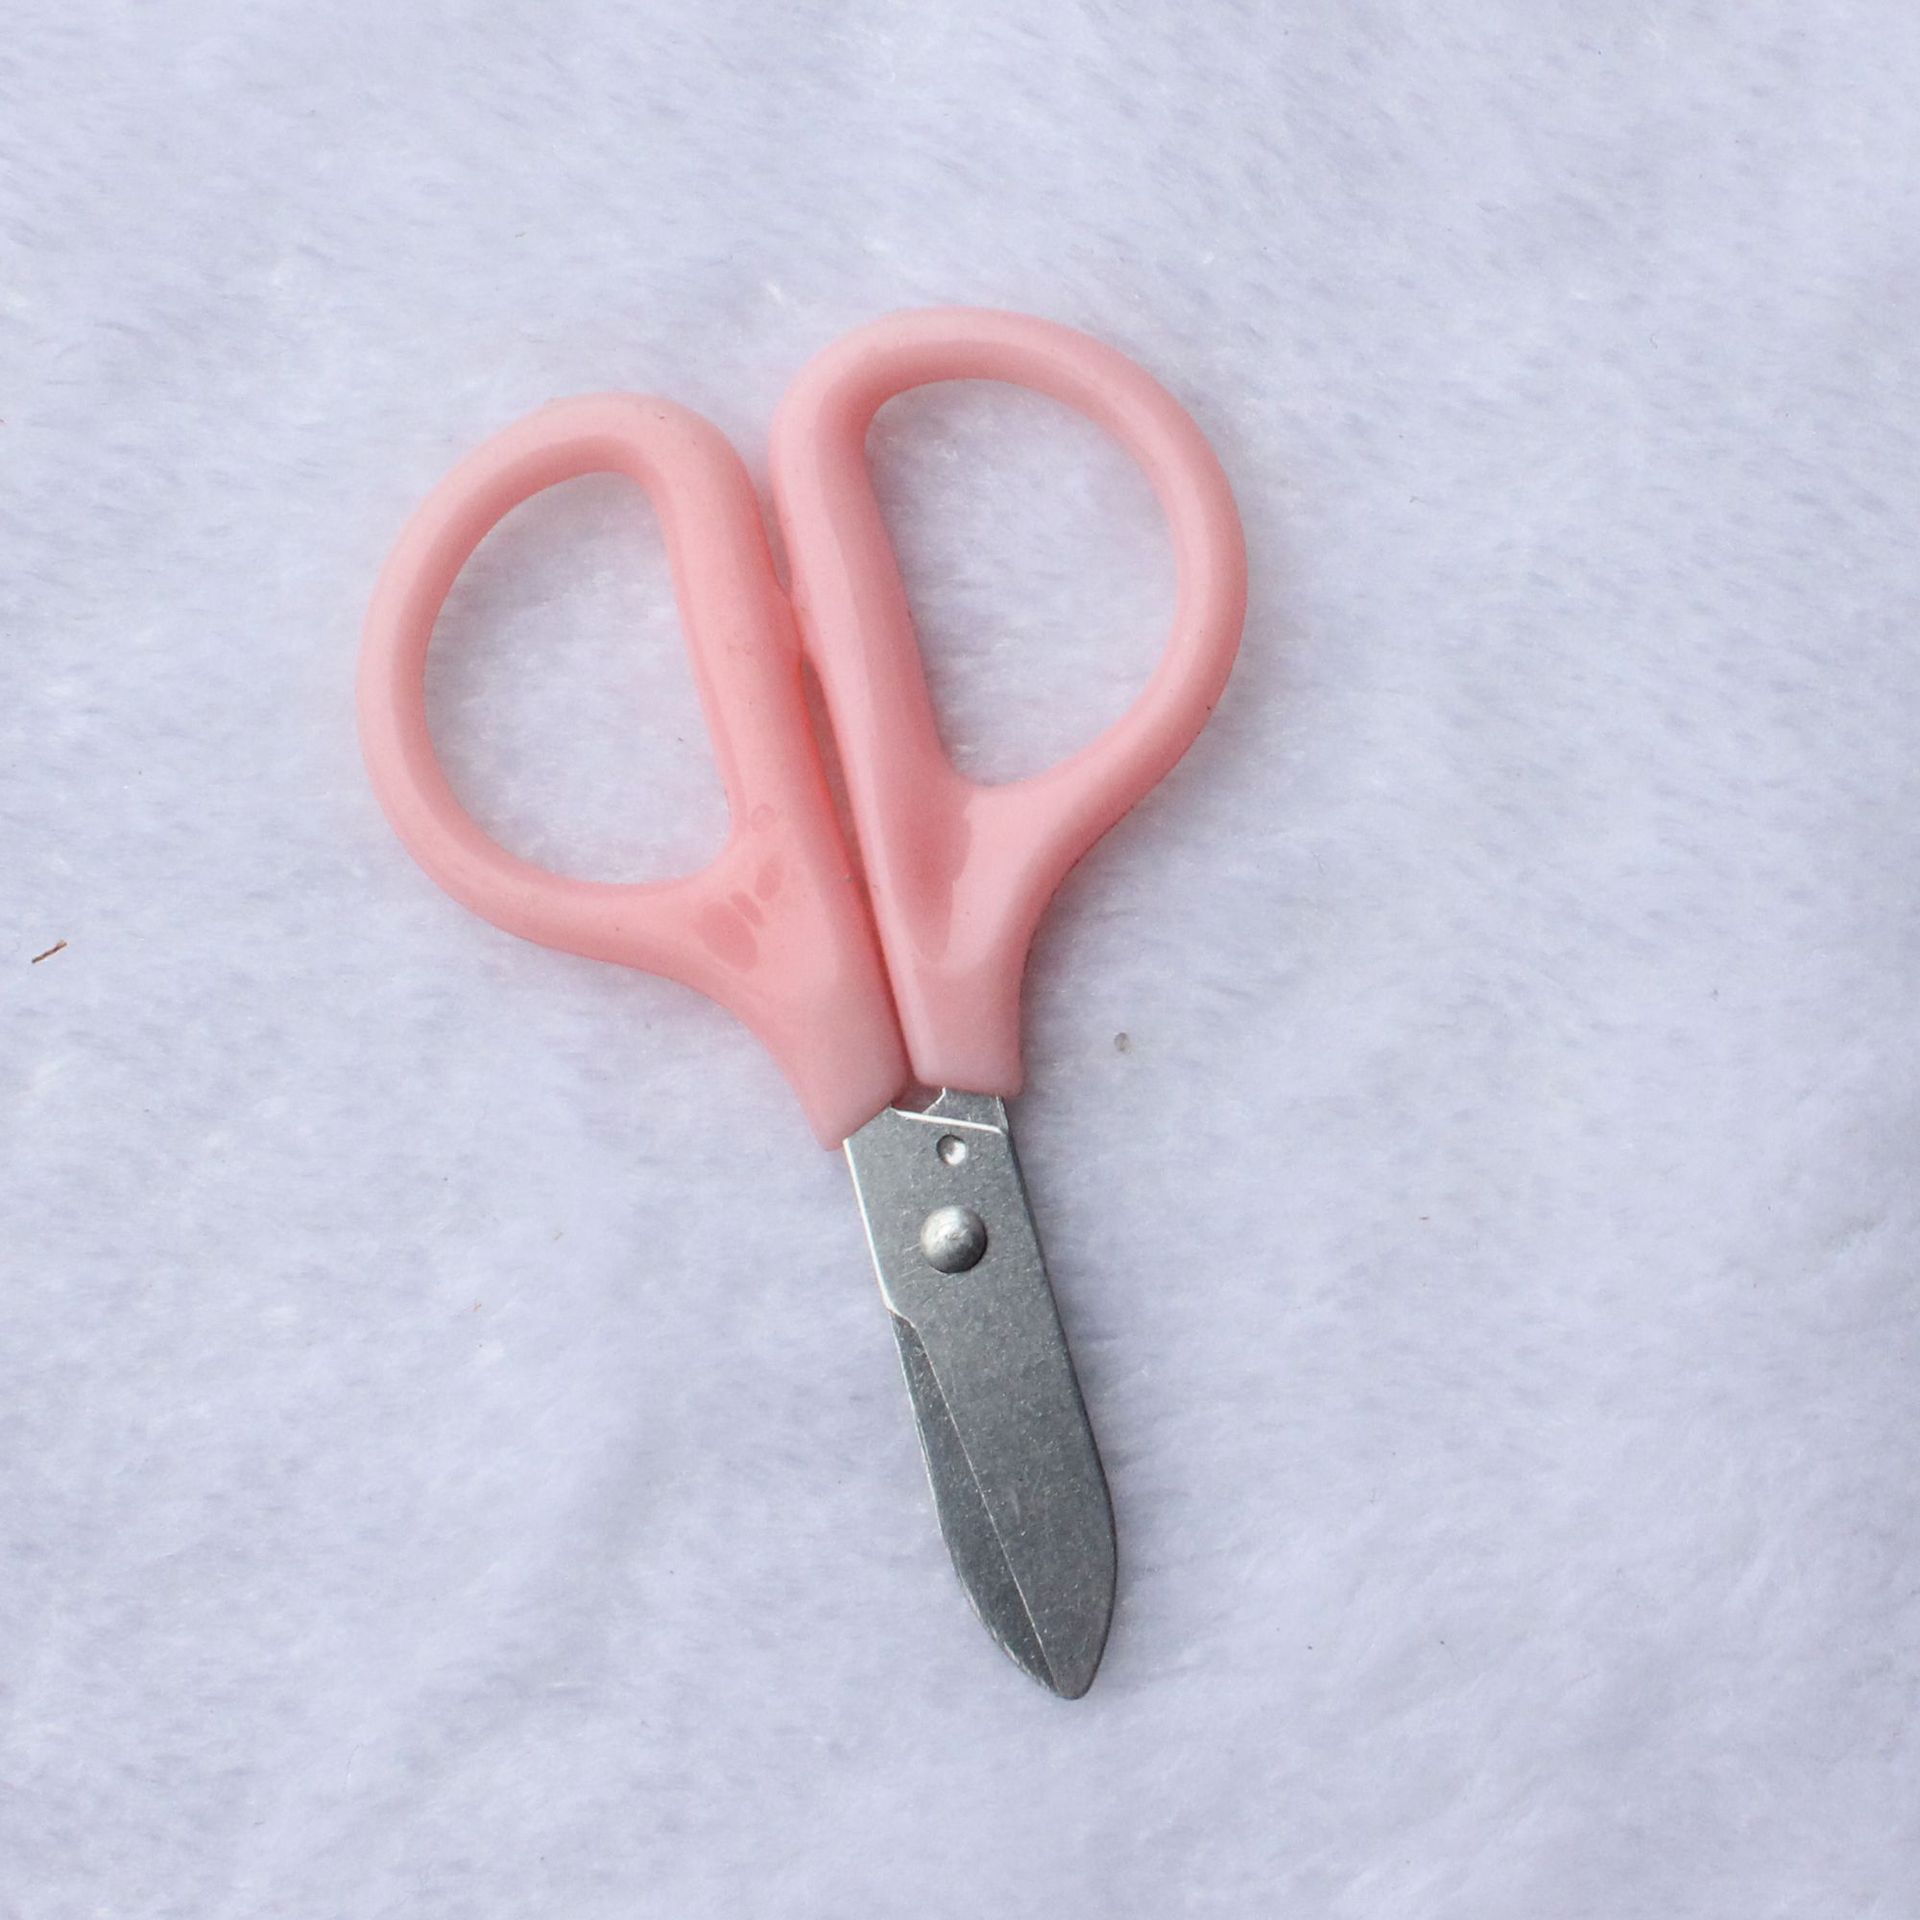 5:Children's scissors